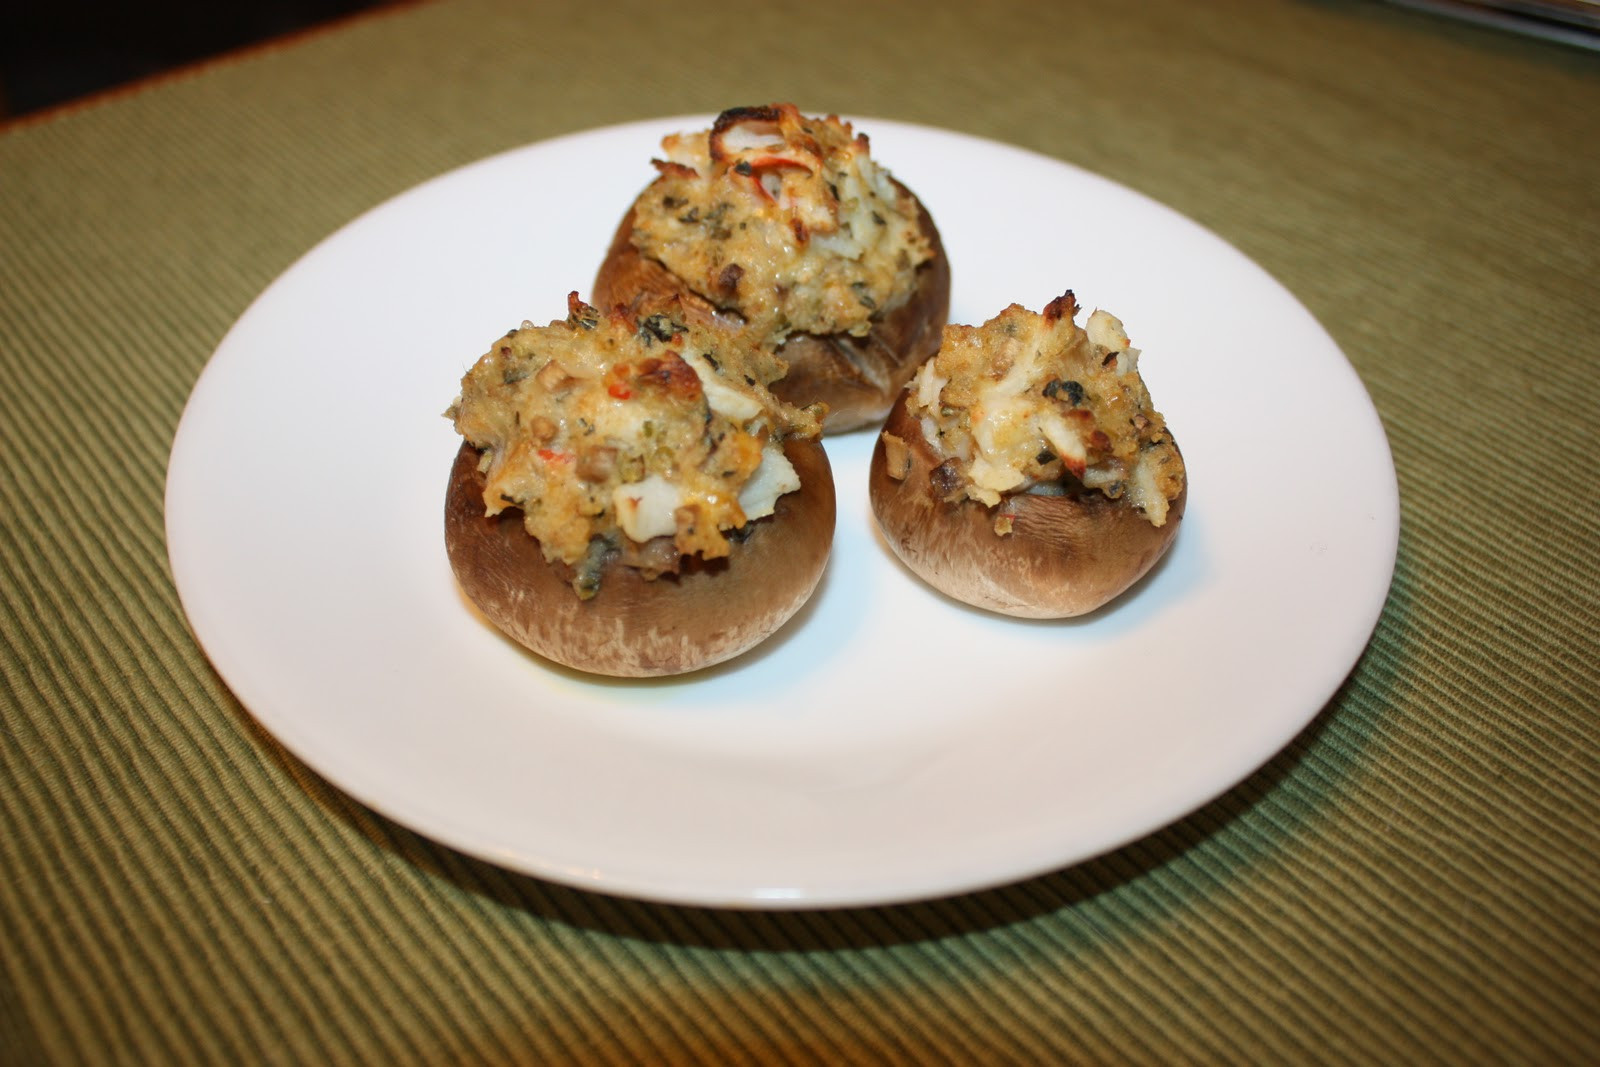 Stuffed Mushroom Recipes With Crab Meat
 Olive The Ingre nts Crab Stuffed Mushrooms